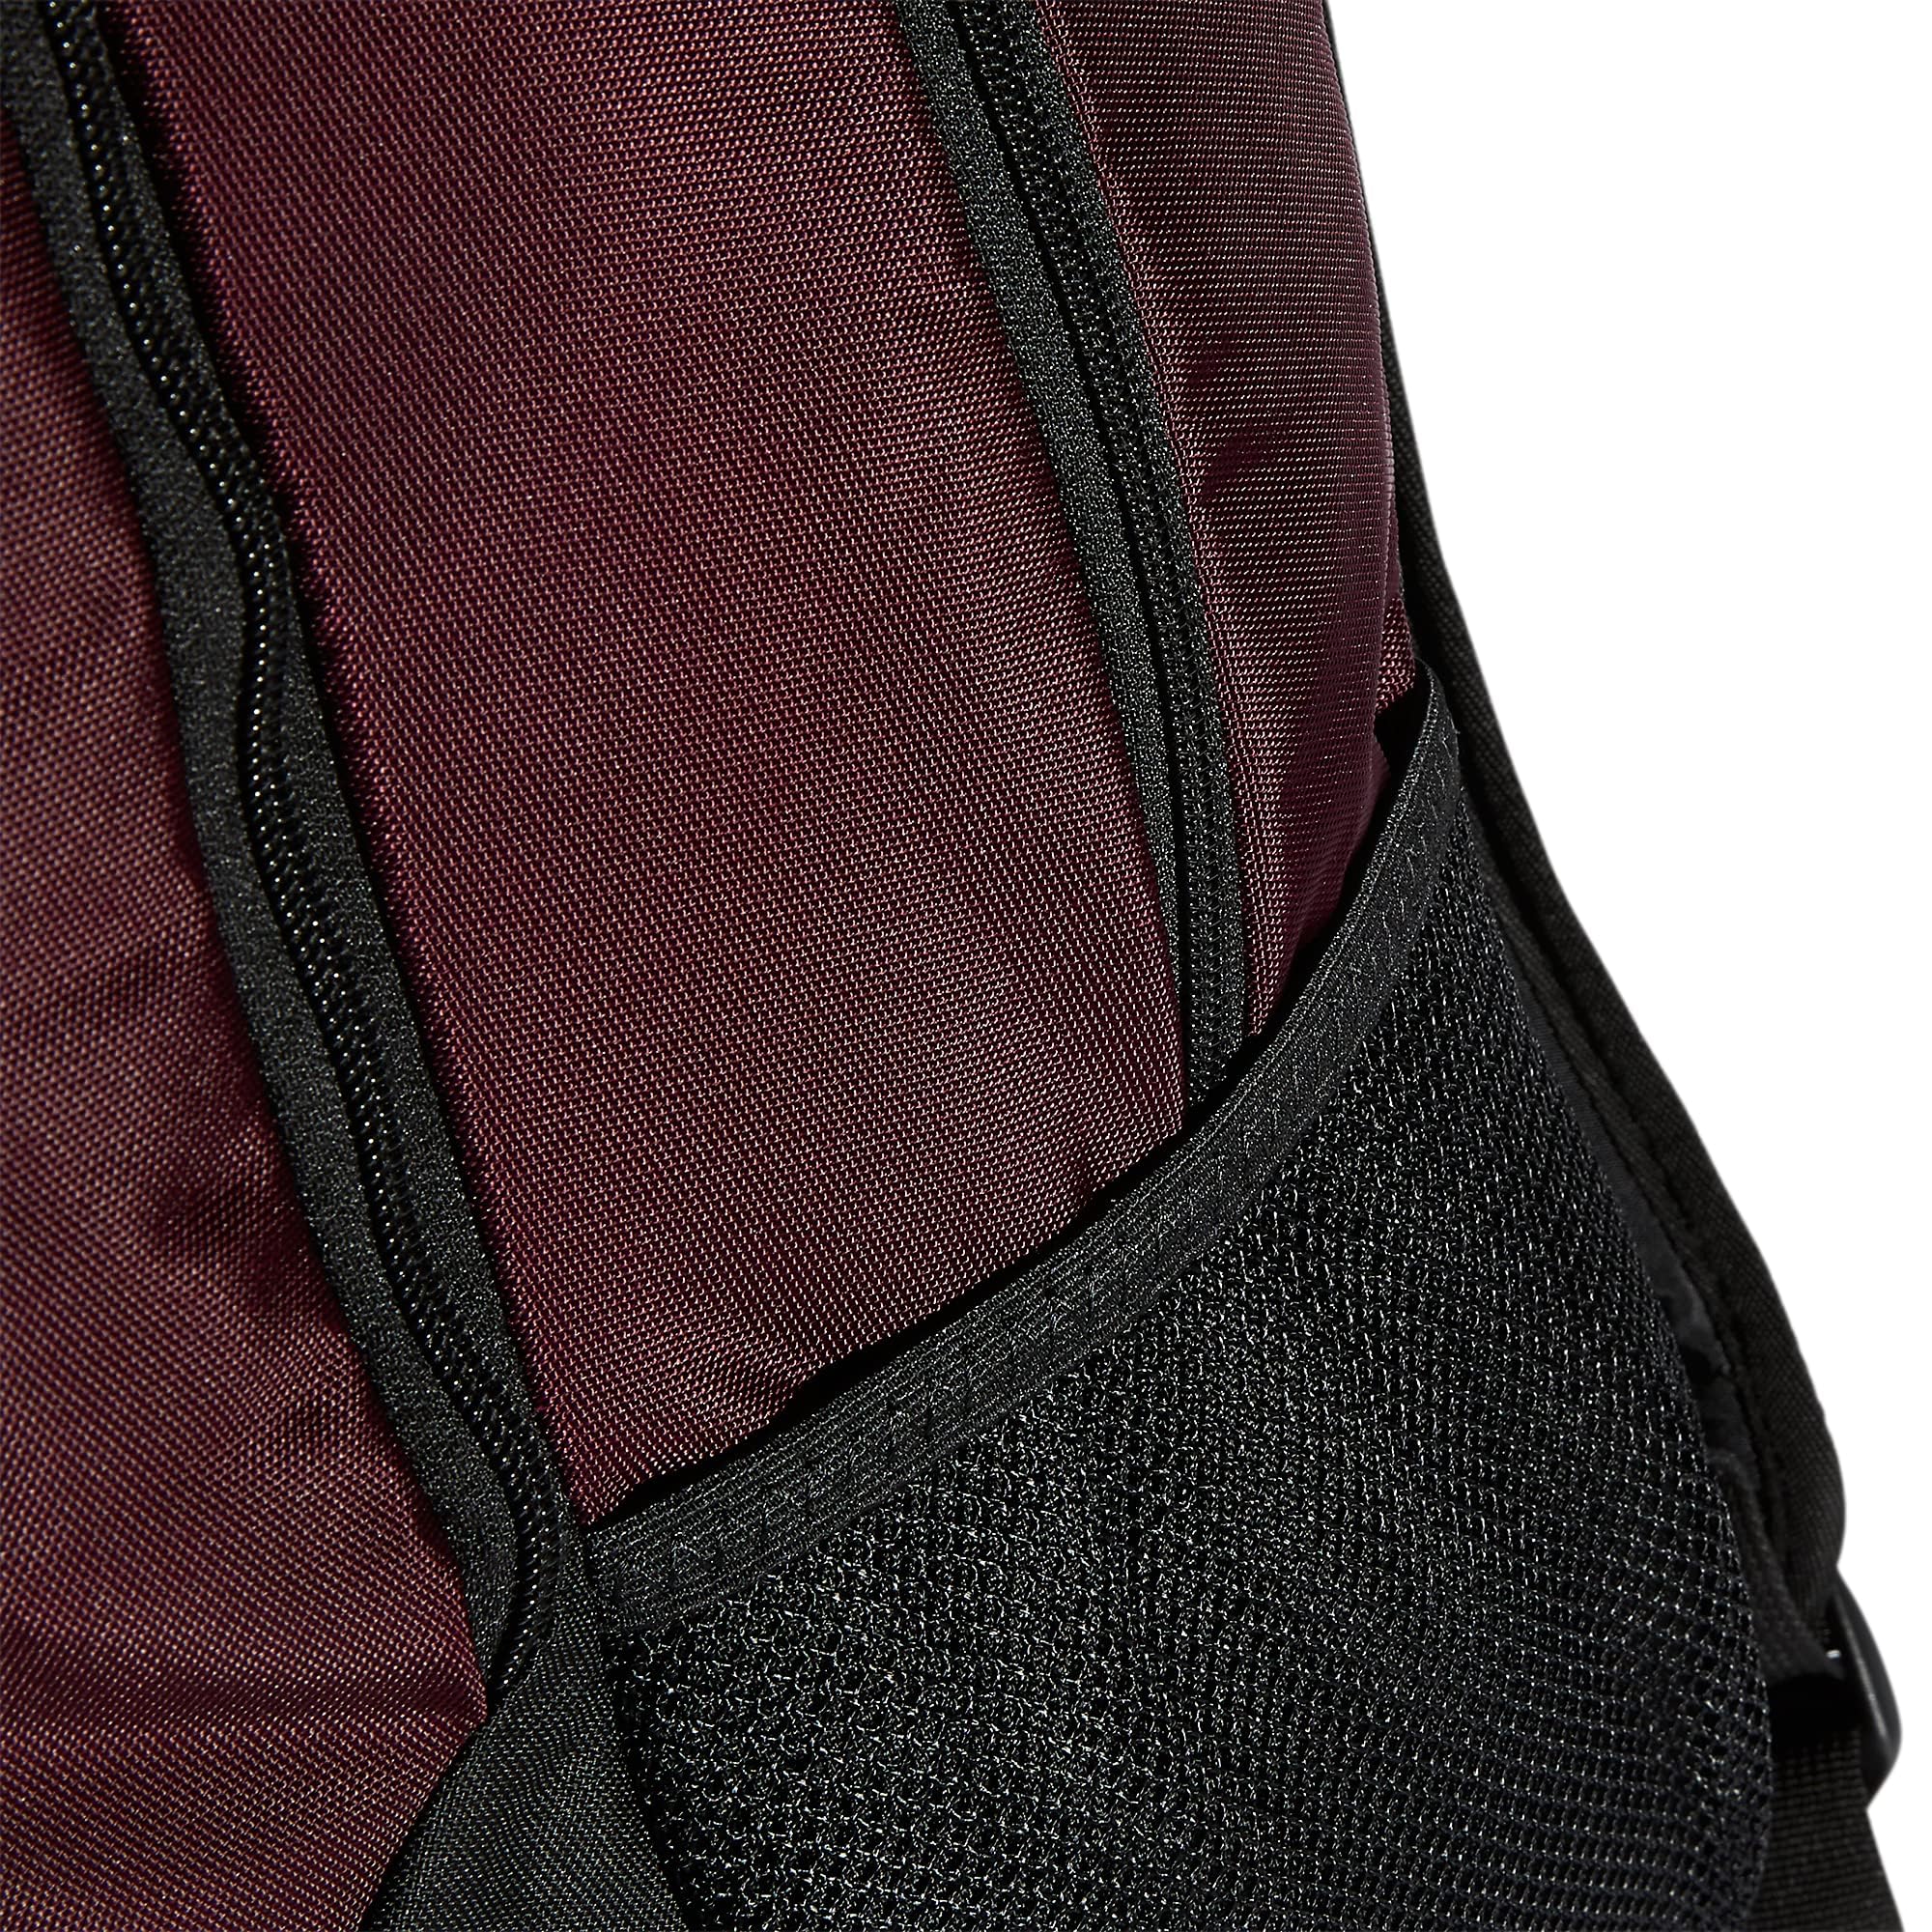 adidas Striker 2 Backpack, Team Maroon/Black/White, One Size